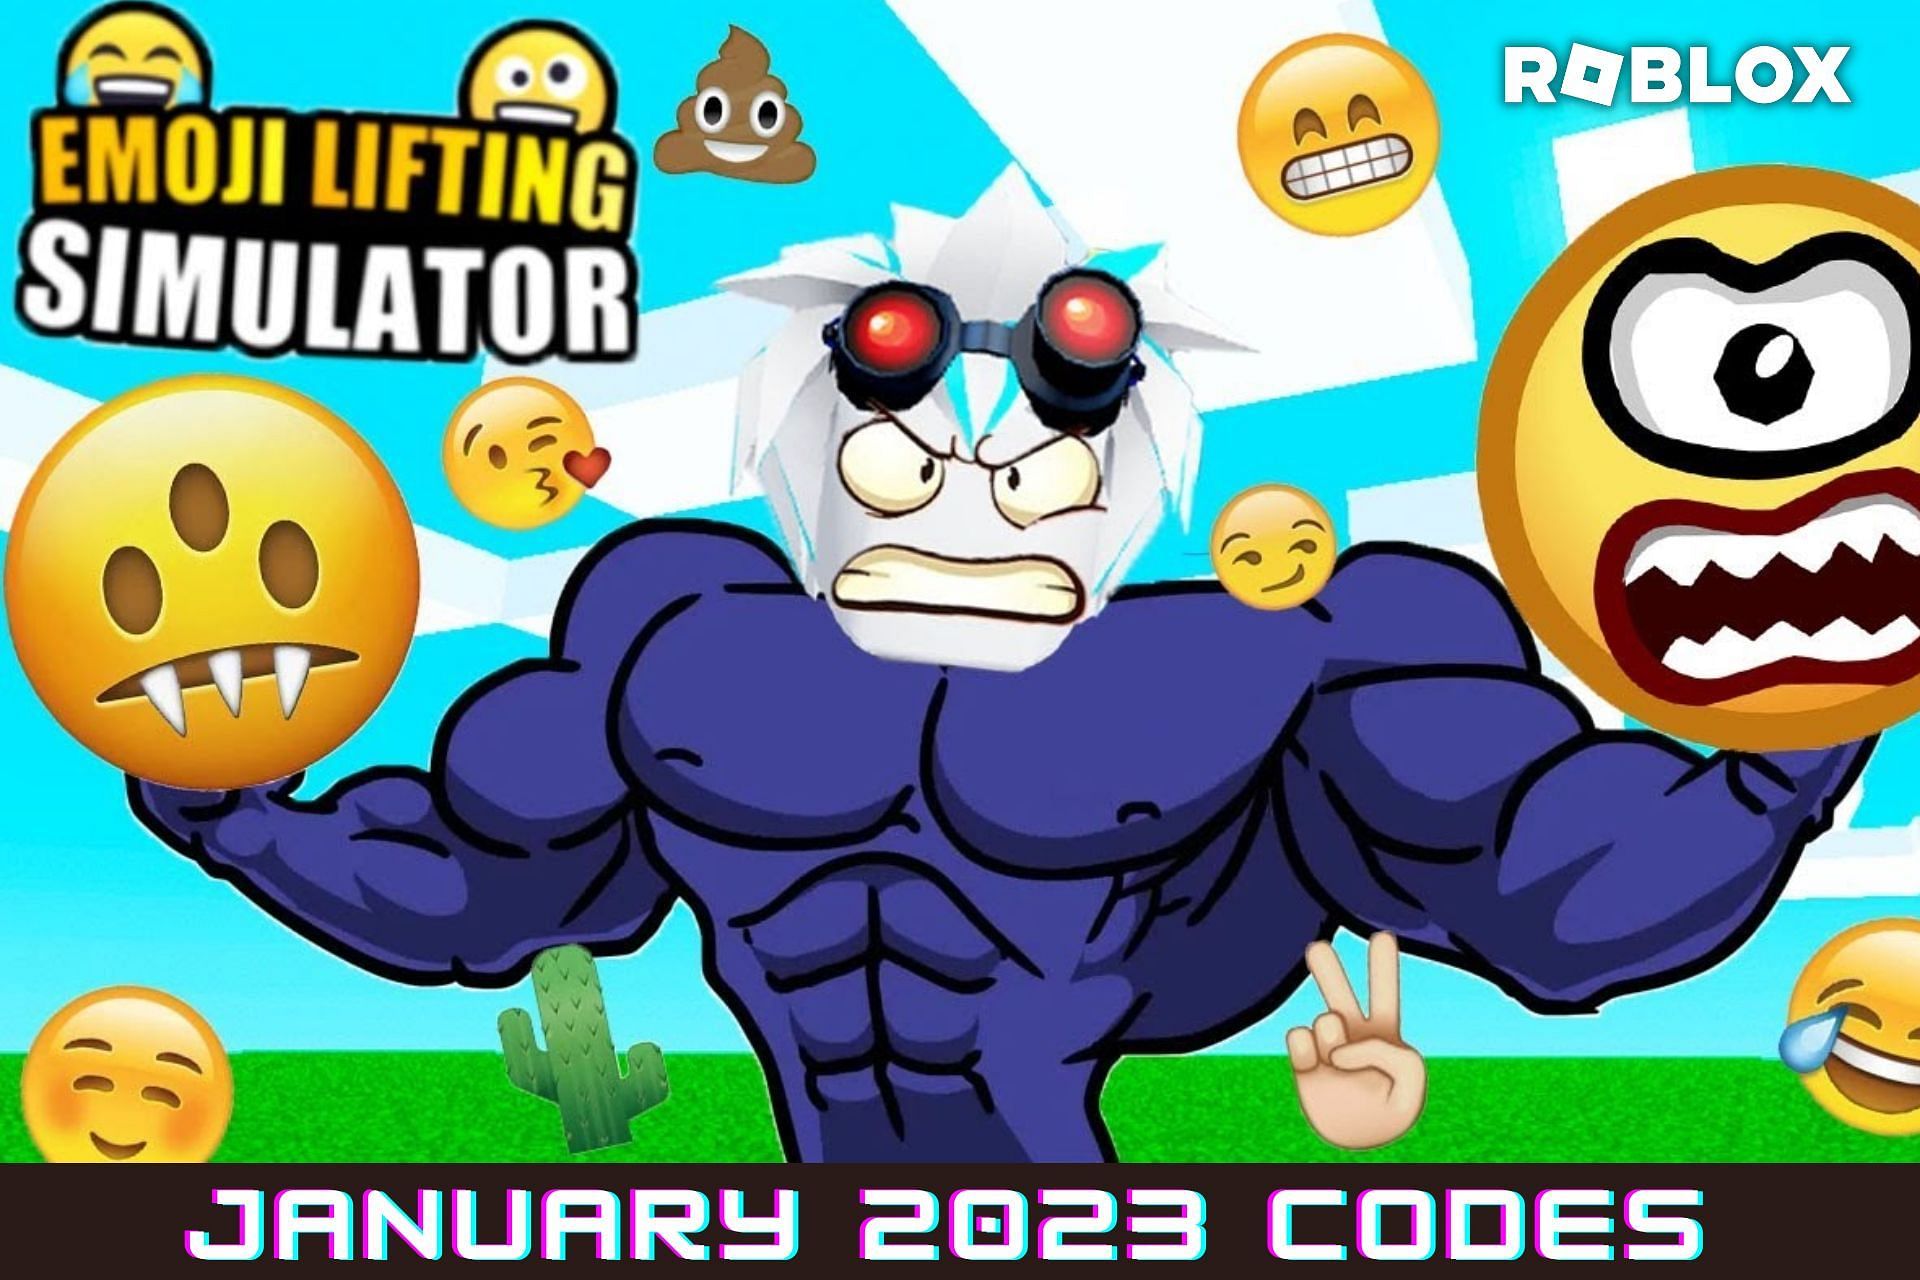 roblox-emoji-lifting-simulator-codes-for-january-2023-free-items